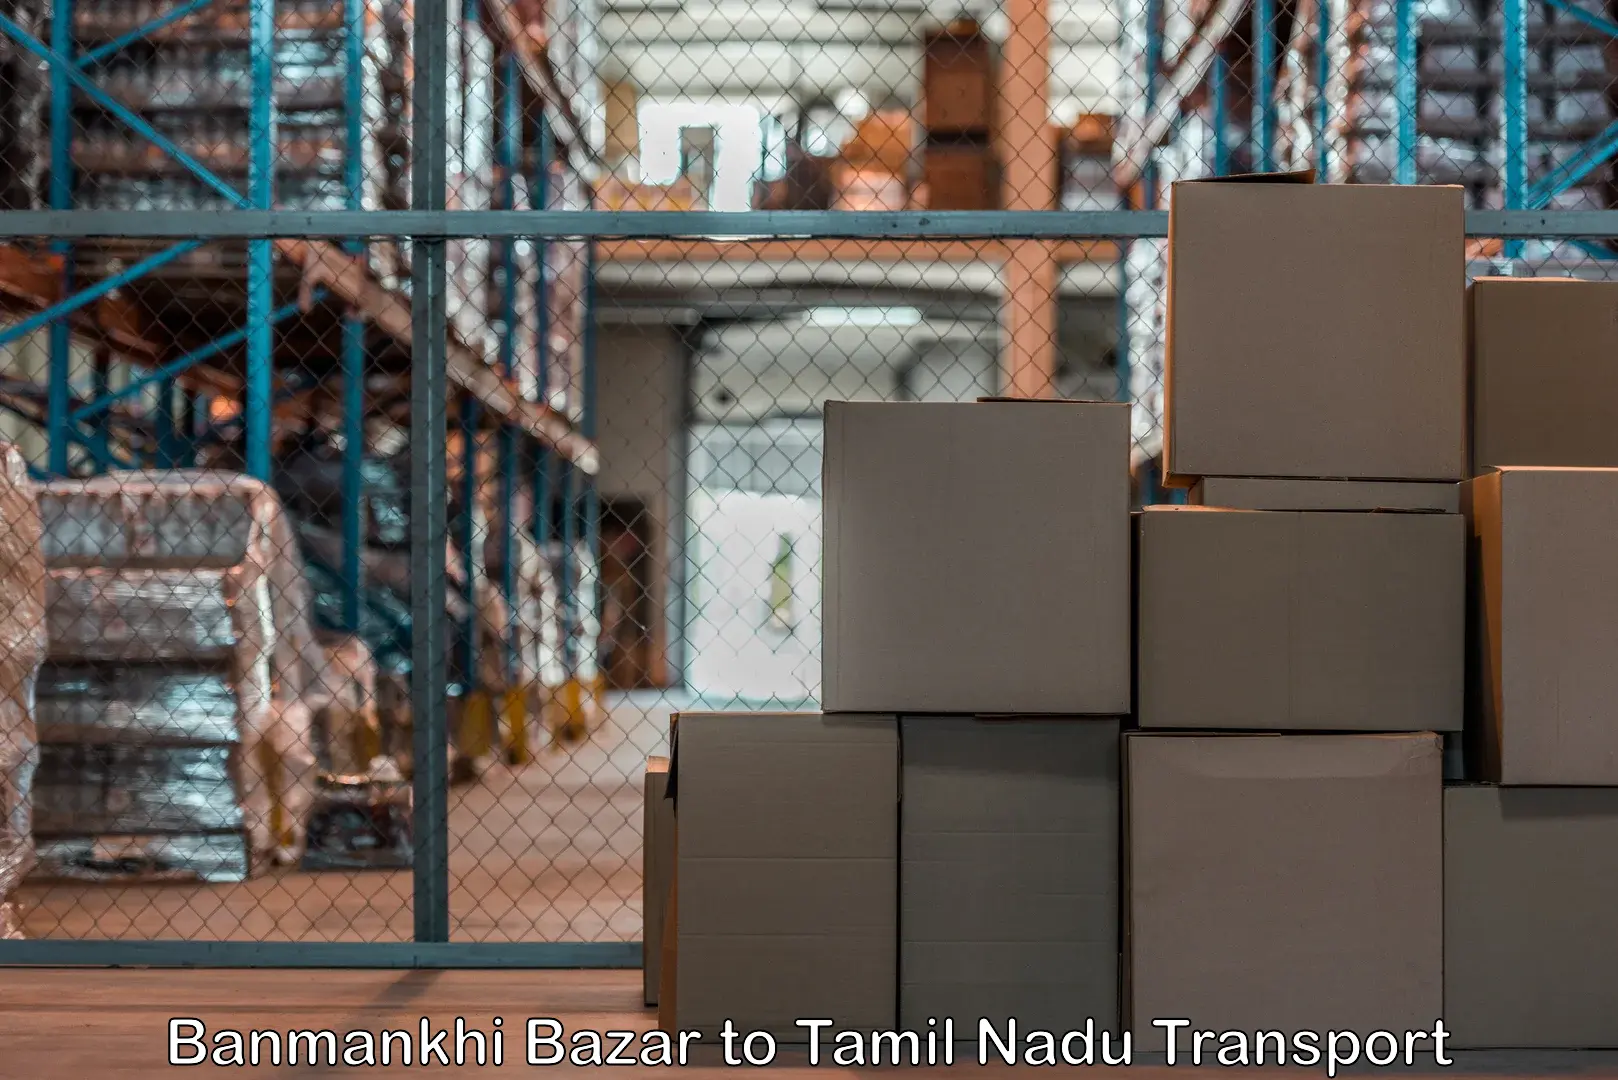 Lorry transport service Banmankhi Bazar to Tamil Nadu